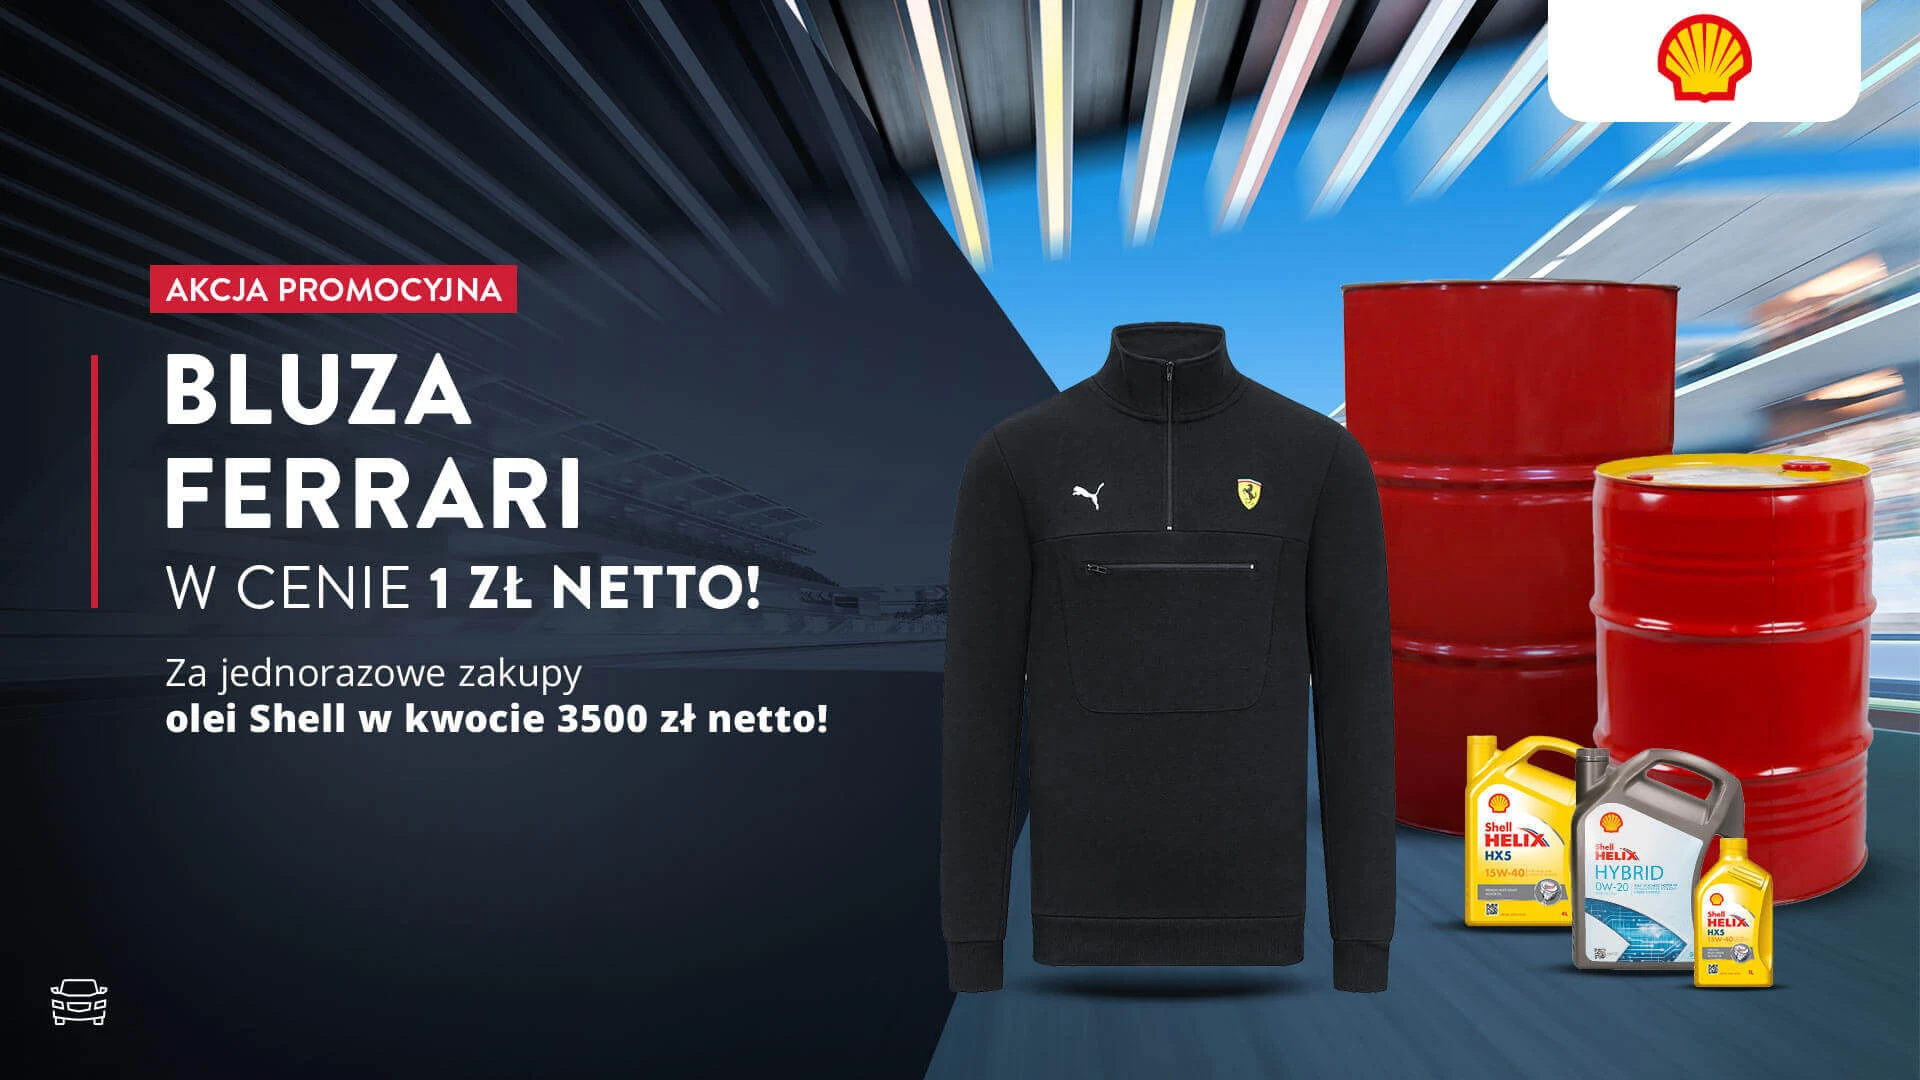 Kup oleje Shell i wygraj bluzę Ferrari!